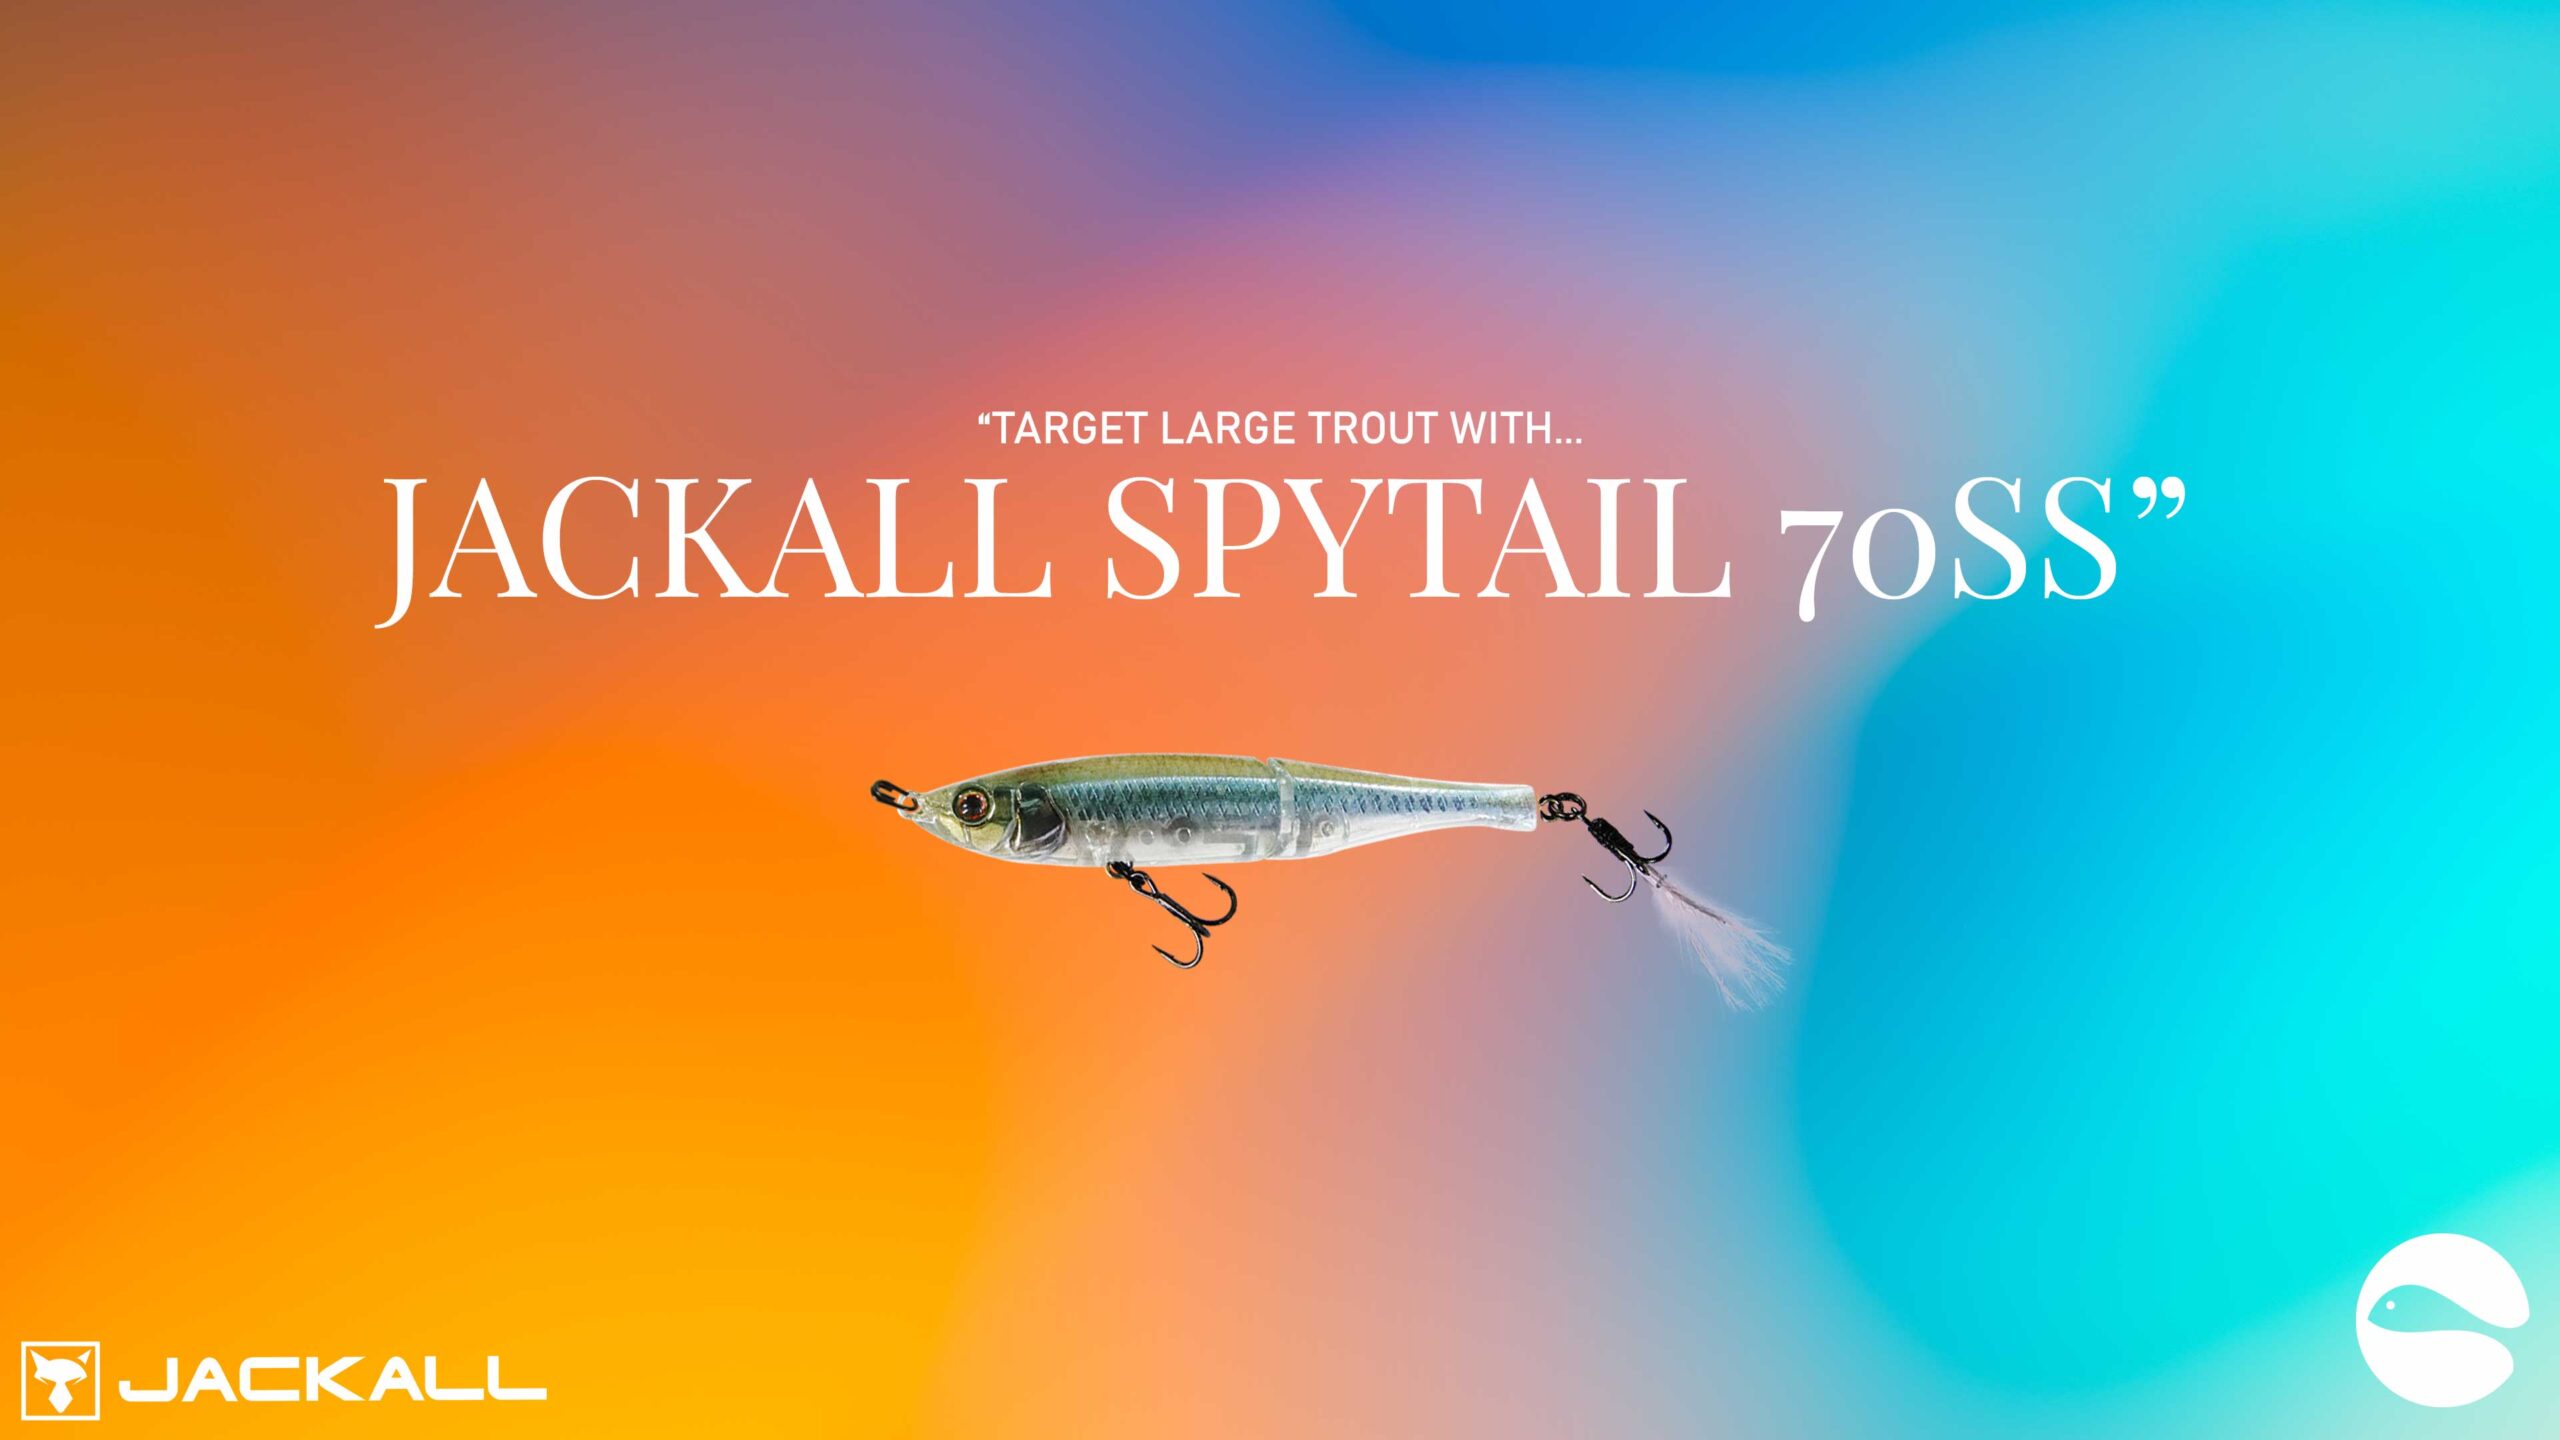 Jackall Spytail 70SS